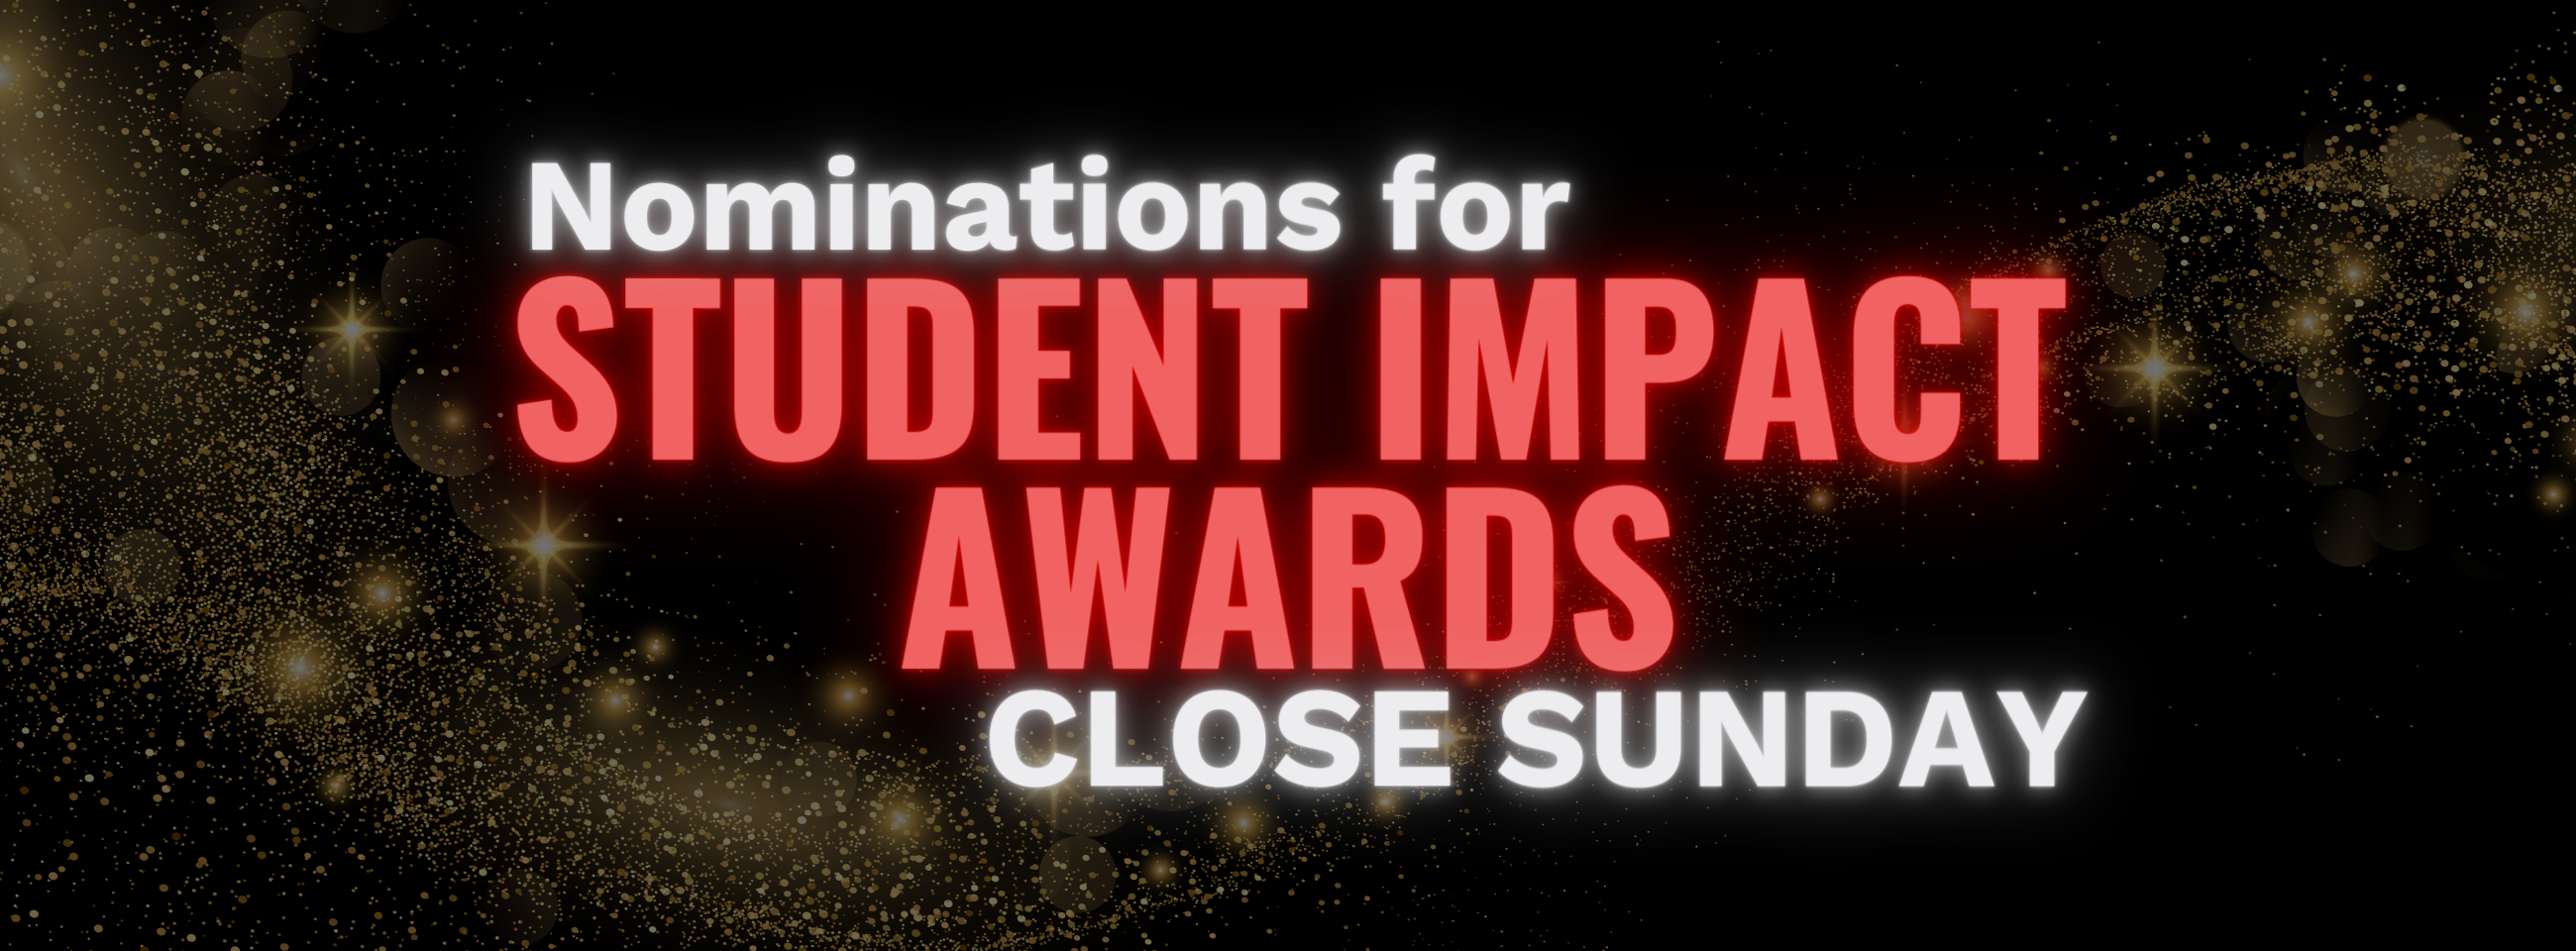 Student Impact Award Nominations